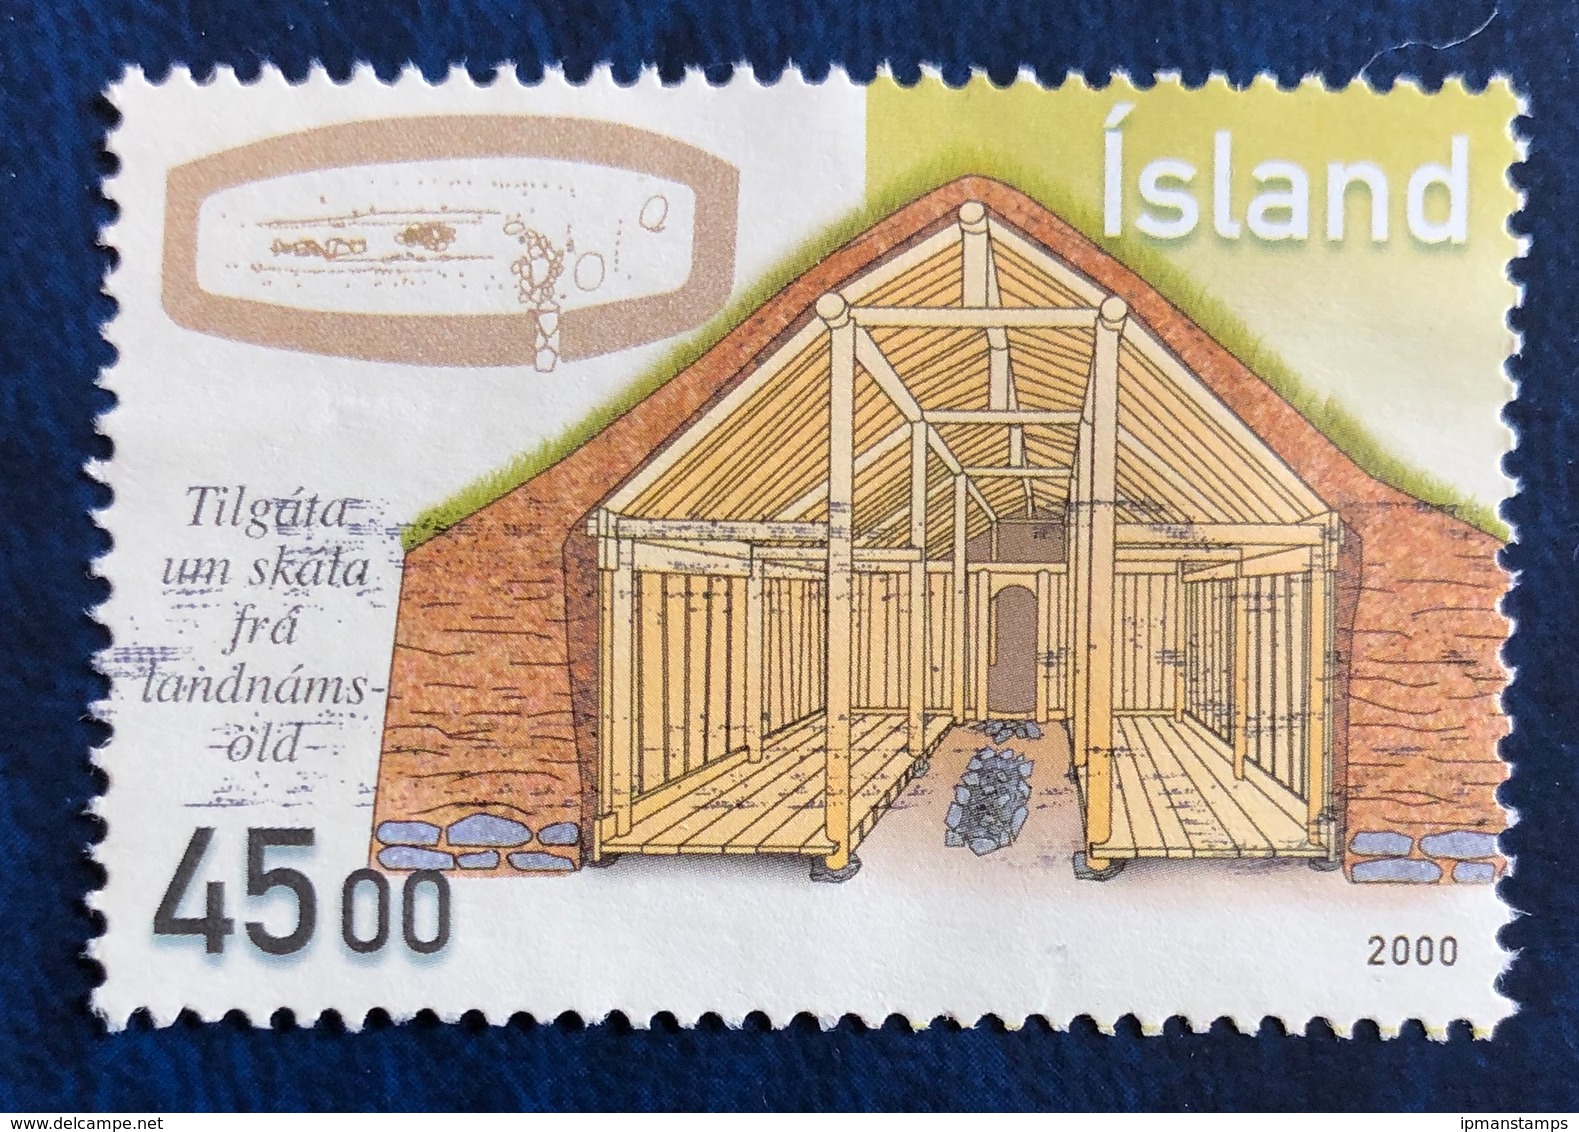 Architettura: Abitazioni Islandesi Di Epoca Vichinga - Architecture: Houses Of The Viking Era - Usados